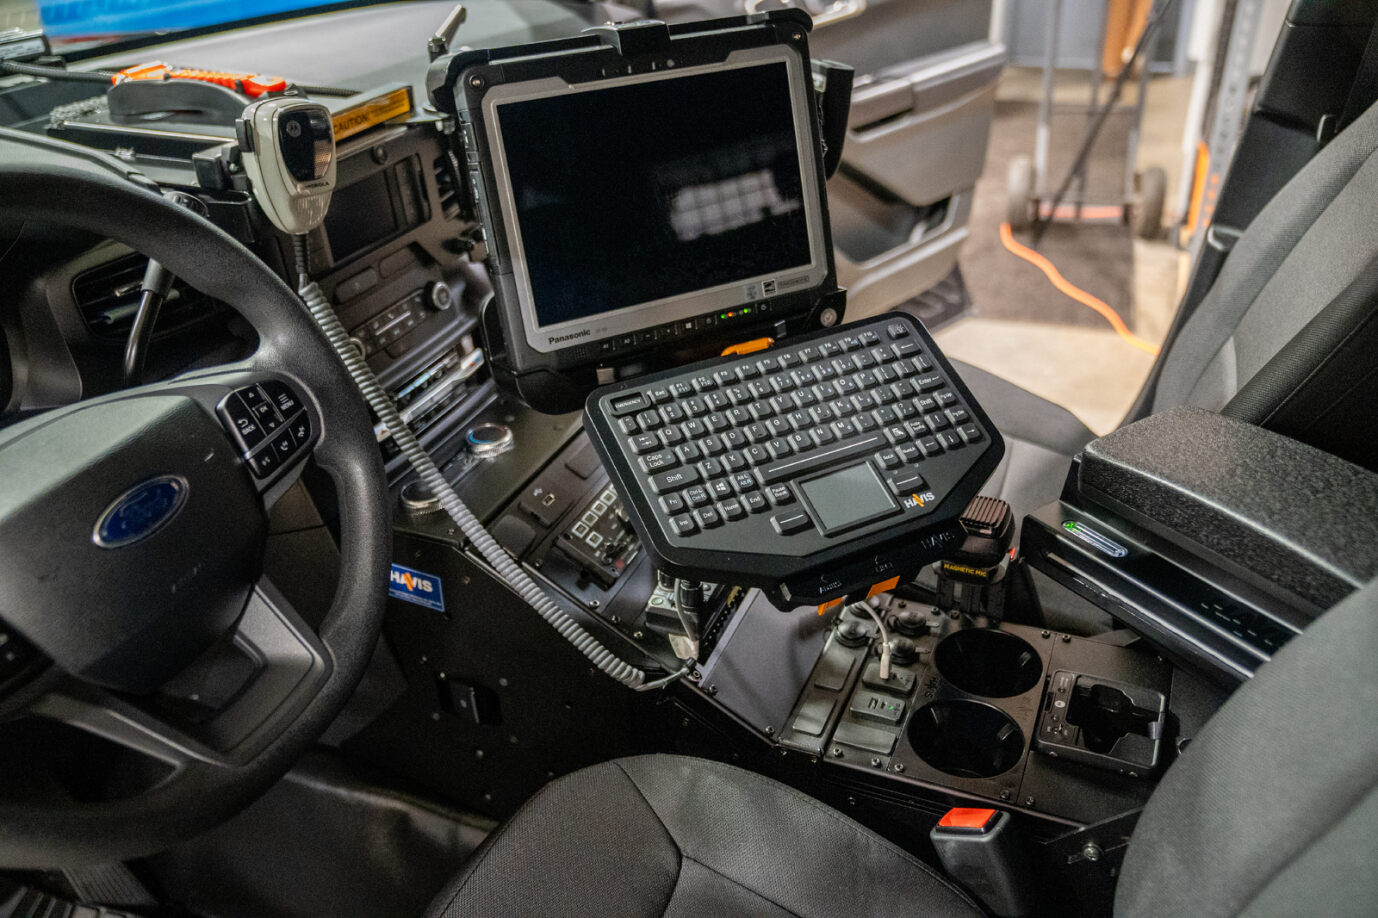 rugged laptop in police cruiser interior